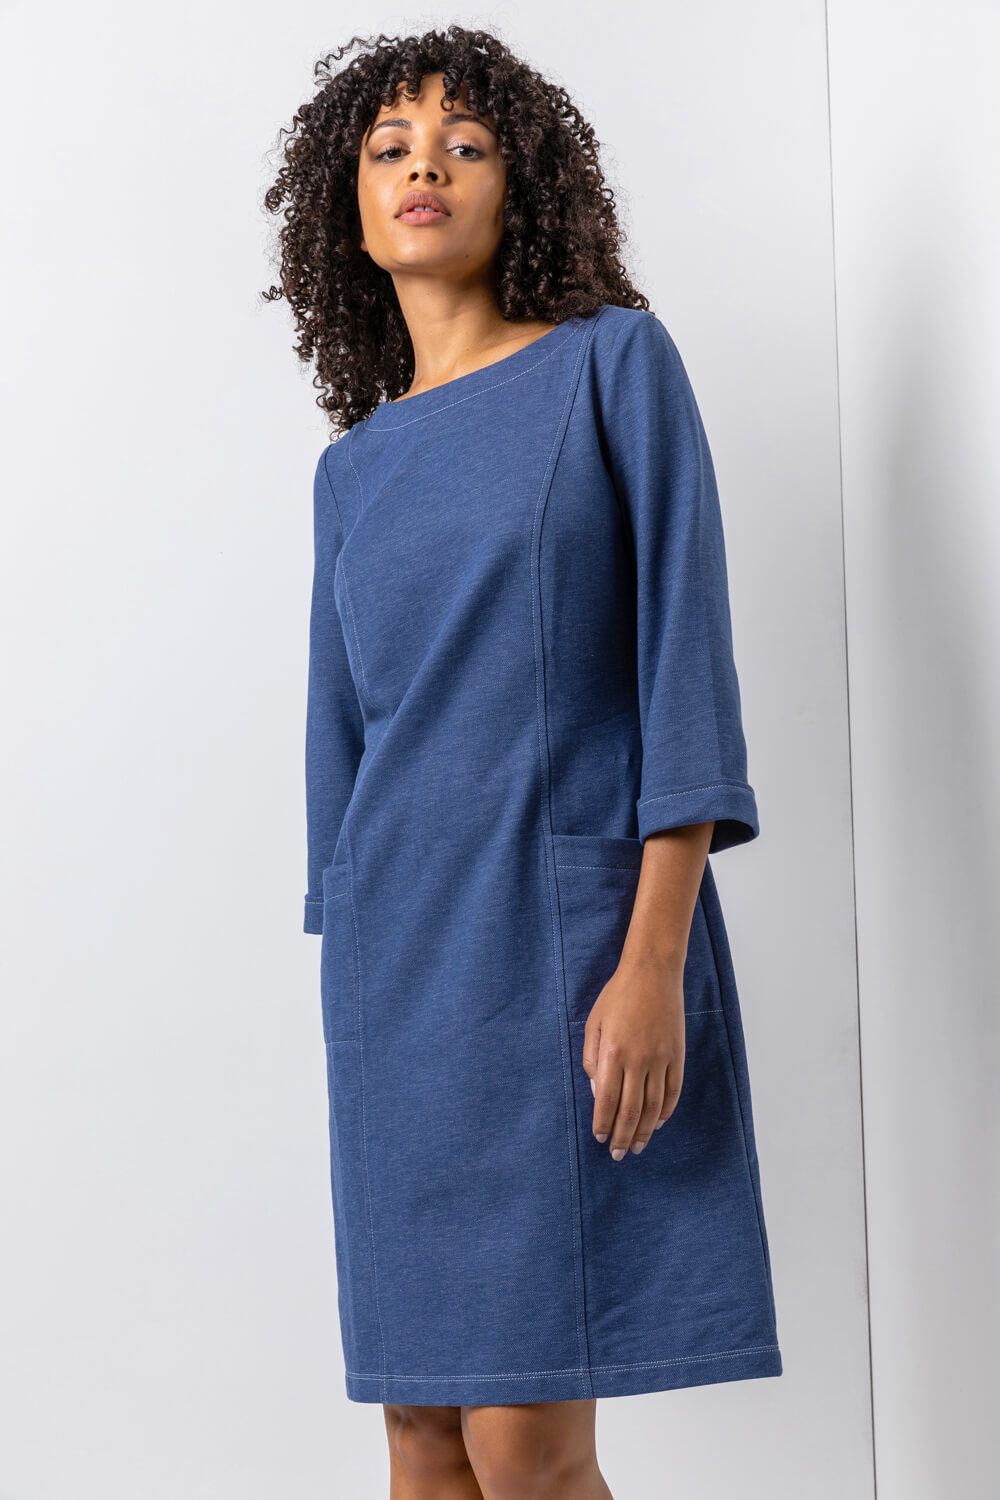 Denim Contrast Stitch Jersey Shift Dress, Image 3 of 4